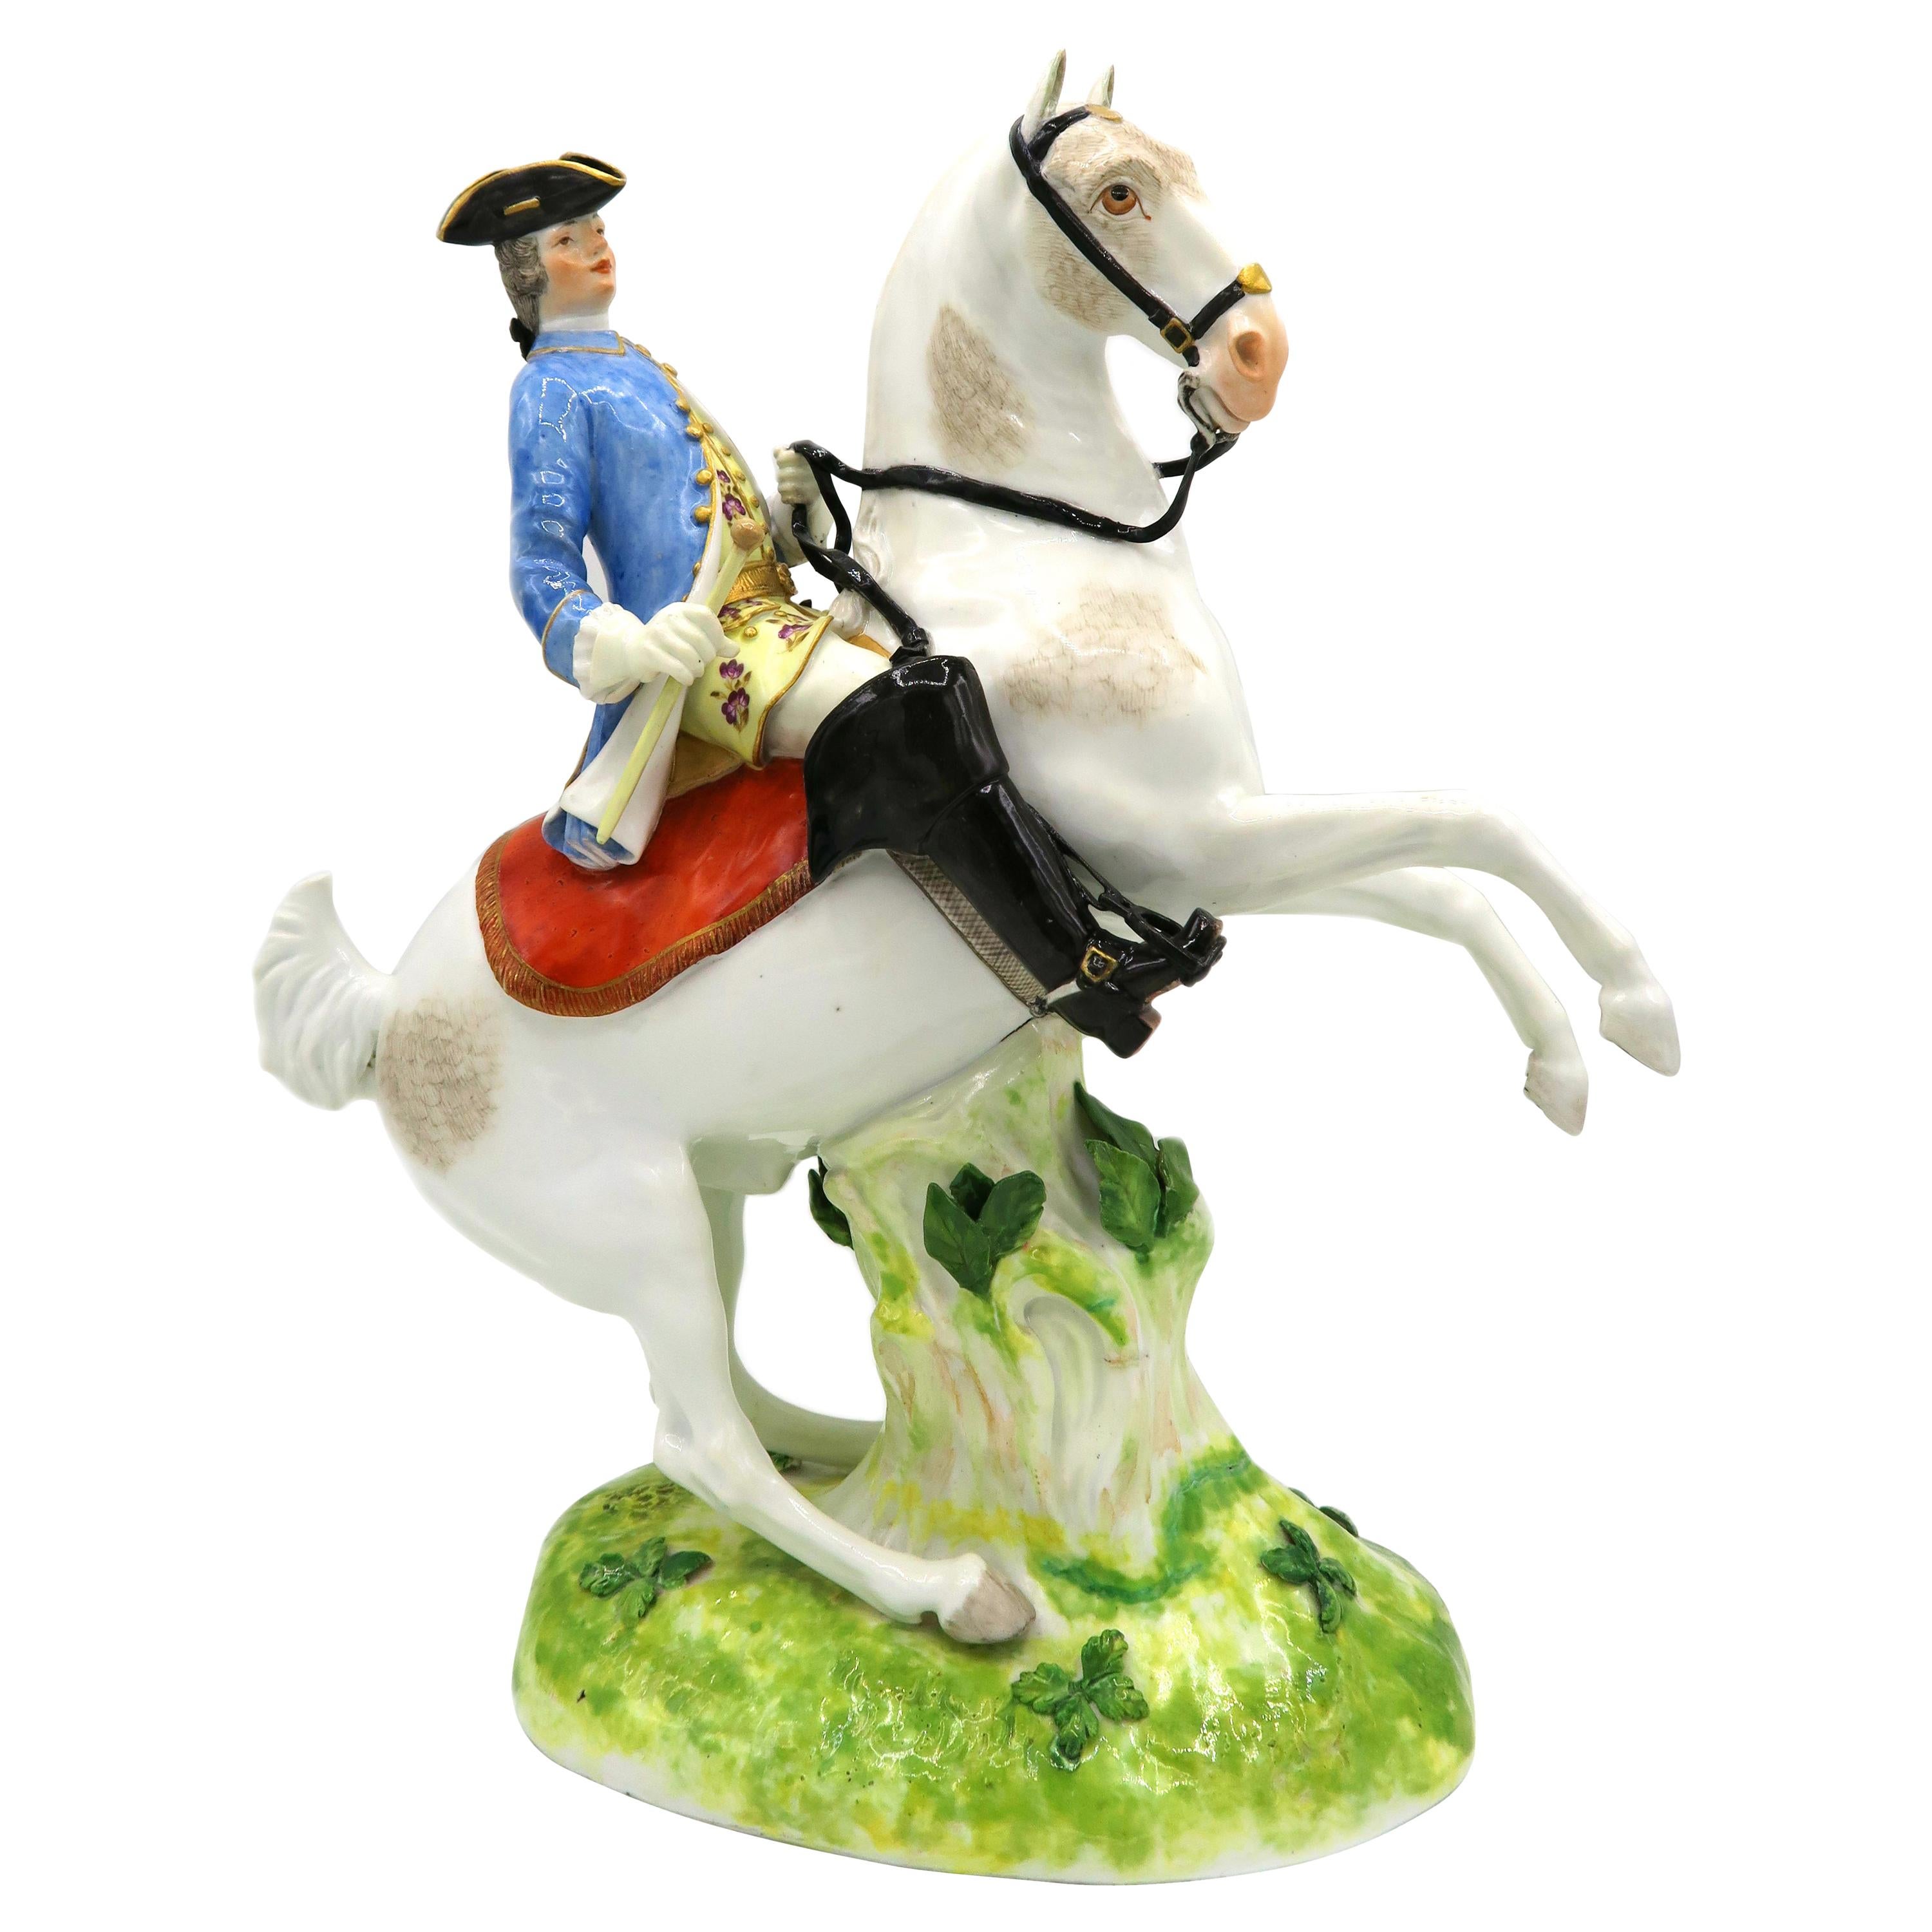 18th Century Meissner Equestrian Figure "Hunter of Dessau" by J. J. Kaendler For Sale